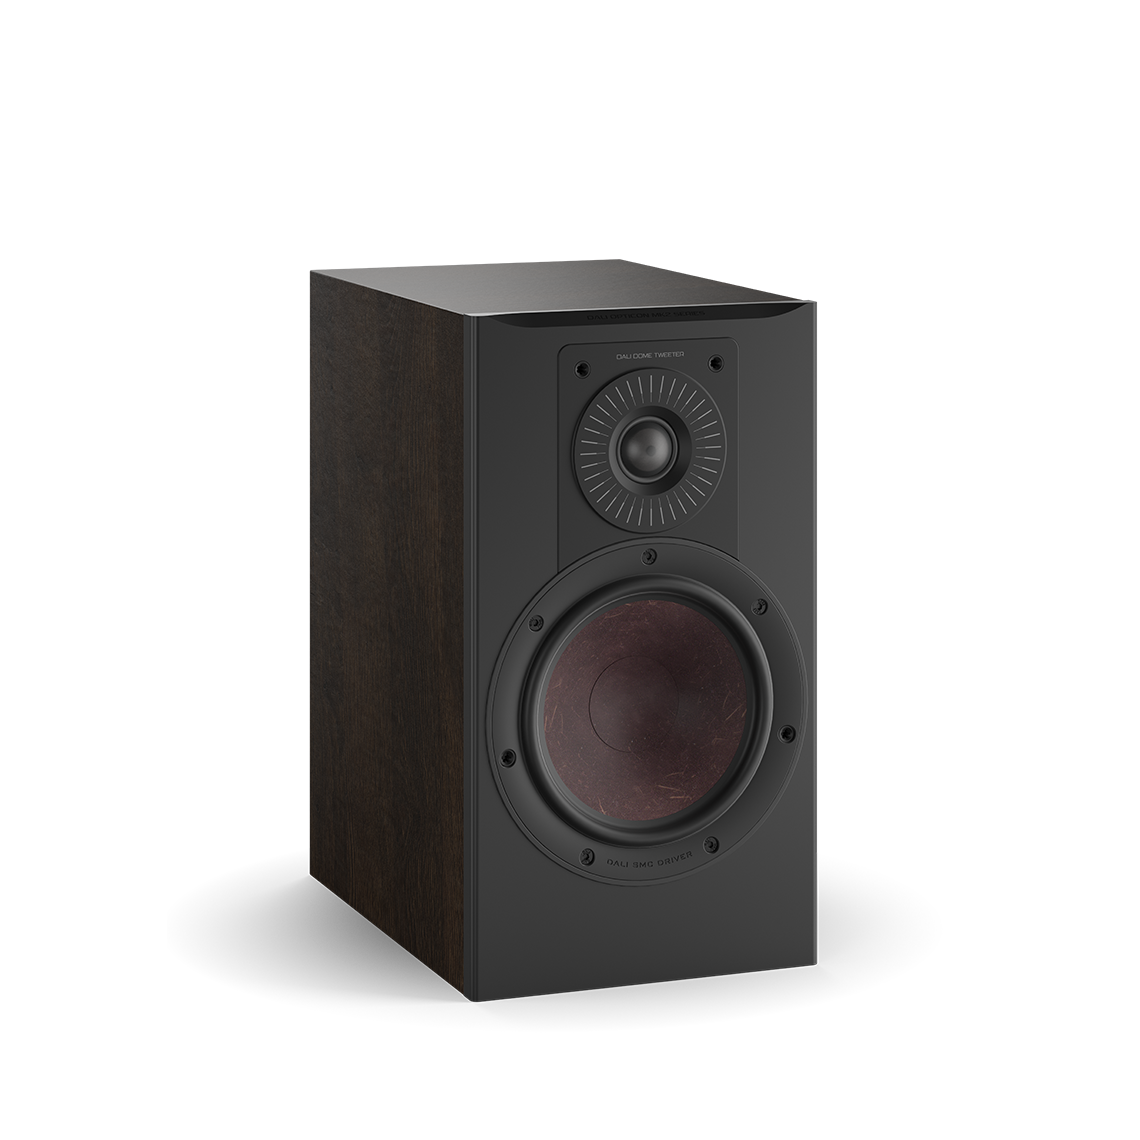 OBERON 3 | Stand-mount speaker with floorstander sound | DALI Speakers